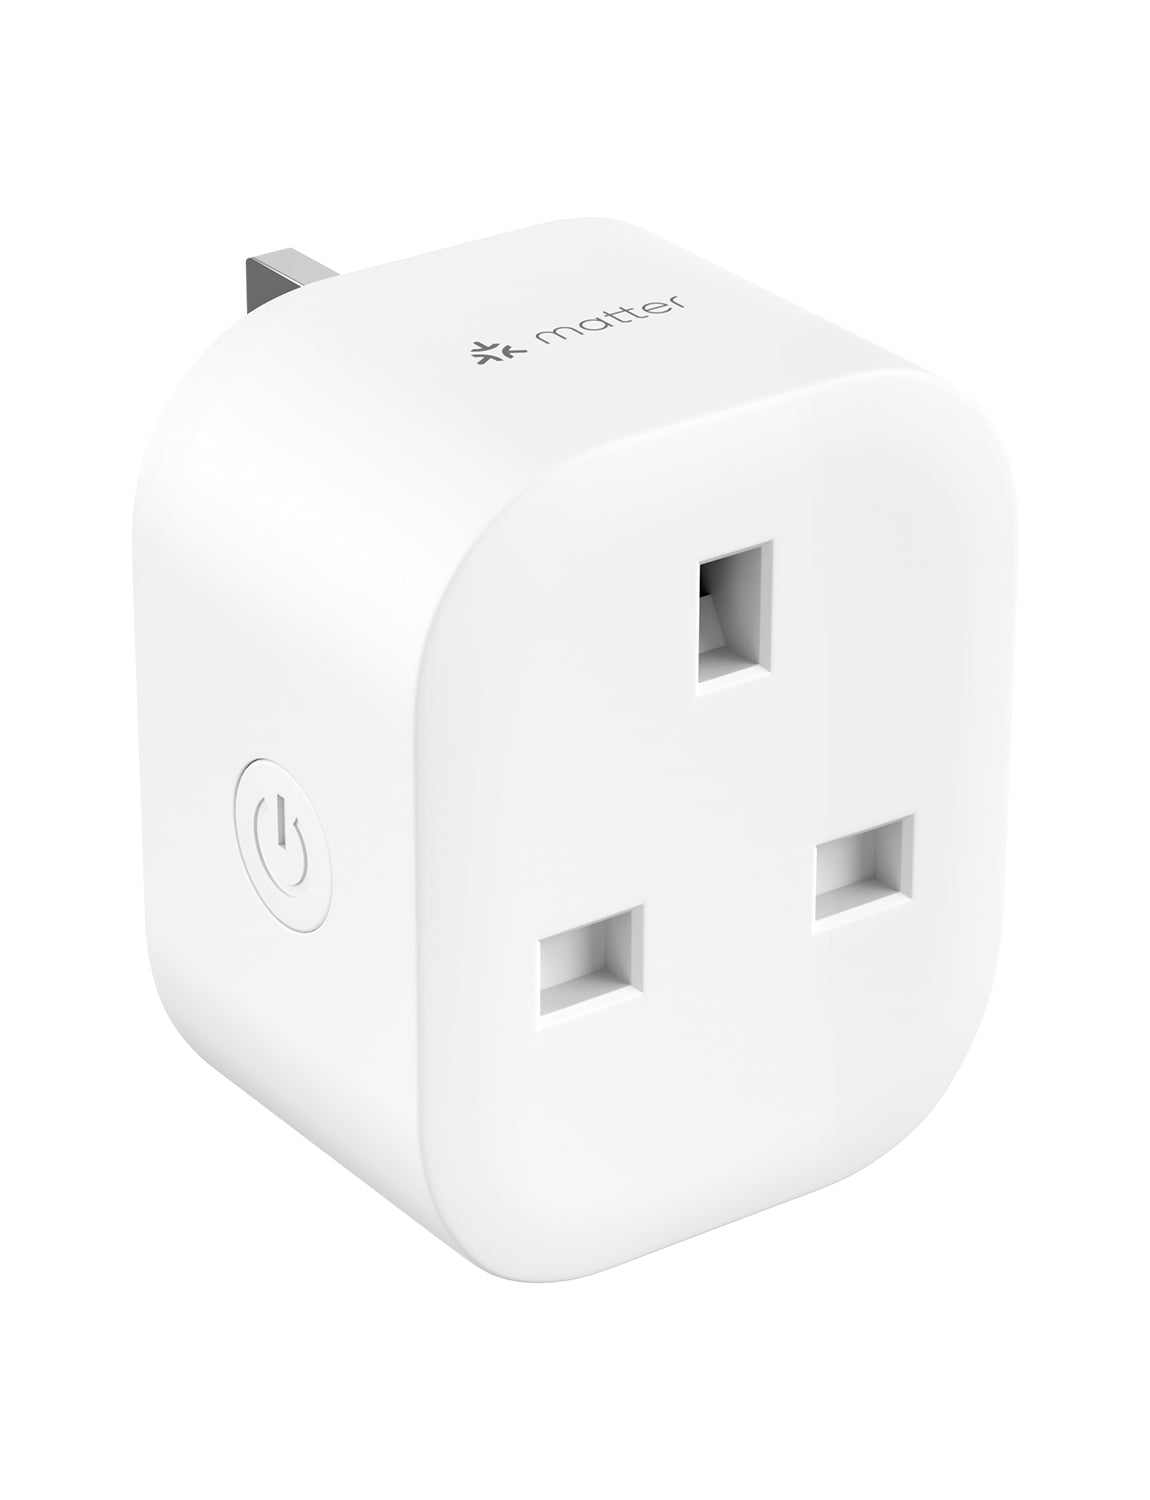 Matter support headlines this meross HomeKit smart plug at the $14